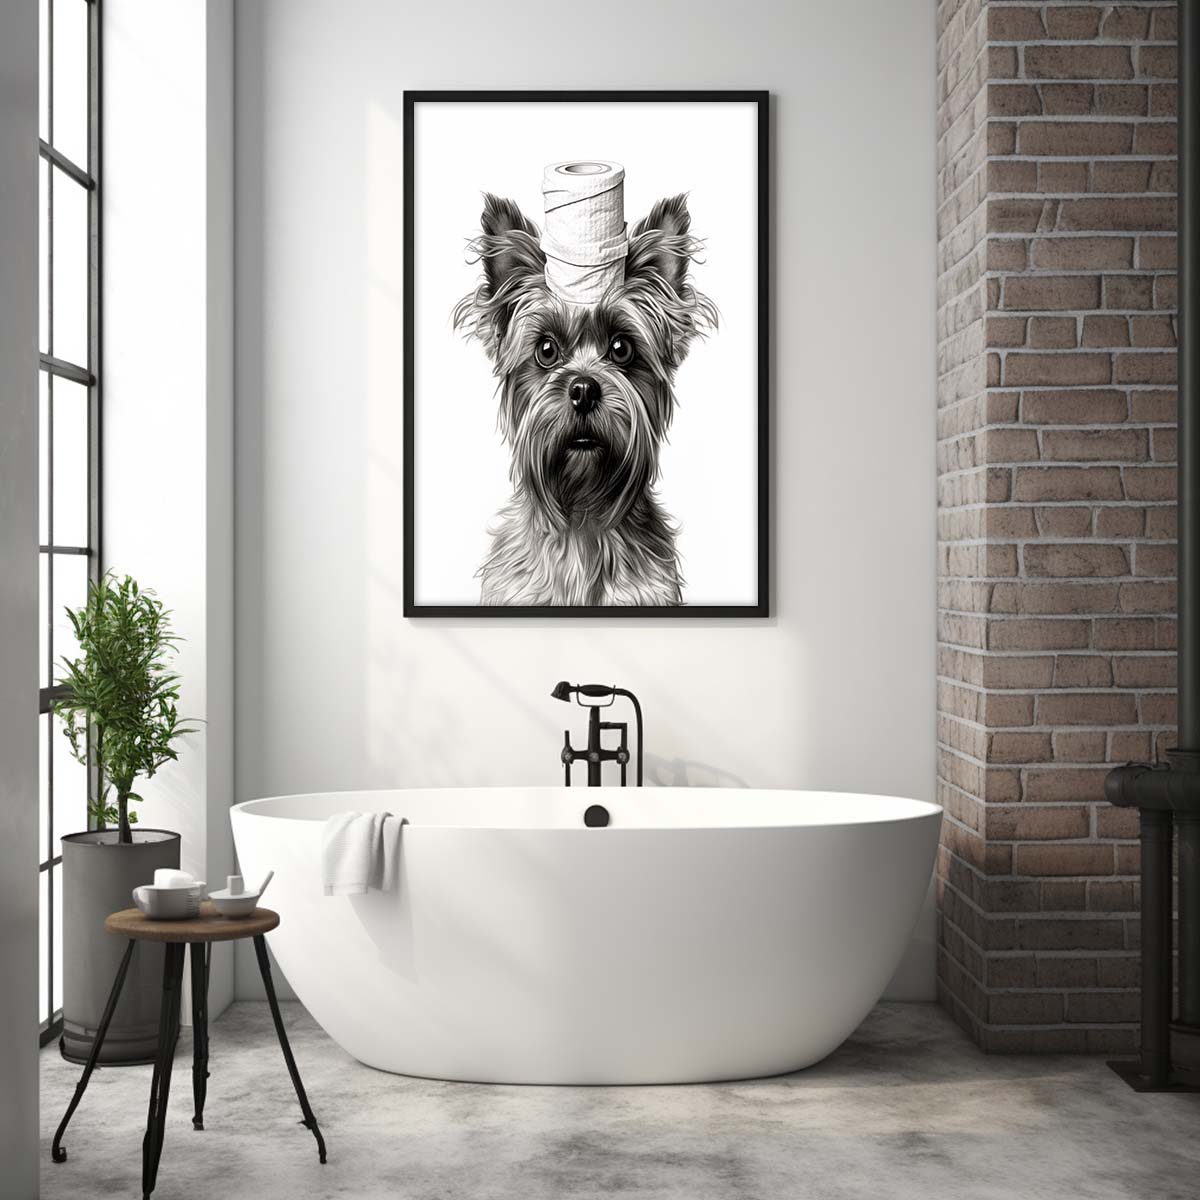 Yorkshire Terrier 01 With Toilet Paper Canvas Art, Yorkshire Terrier With Toilet Paper, Funny Dog Art, Bathroom Wall Decor, Home Decor, Bathroom Wall Art, Dog Wall Decor, Animal Decor, Pet Gift